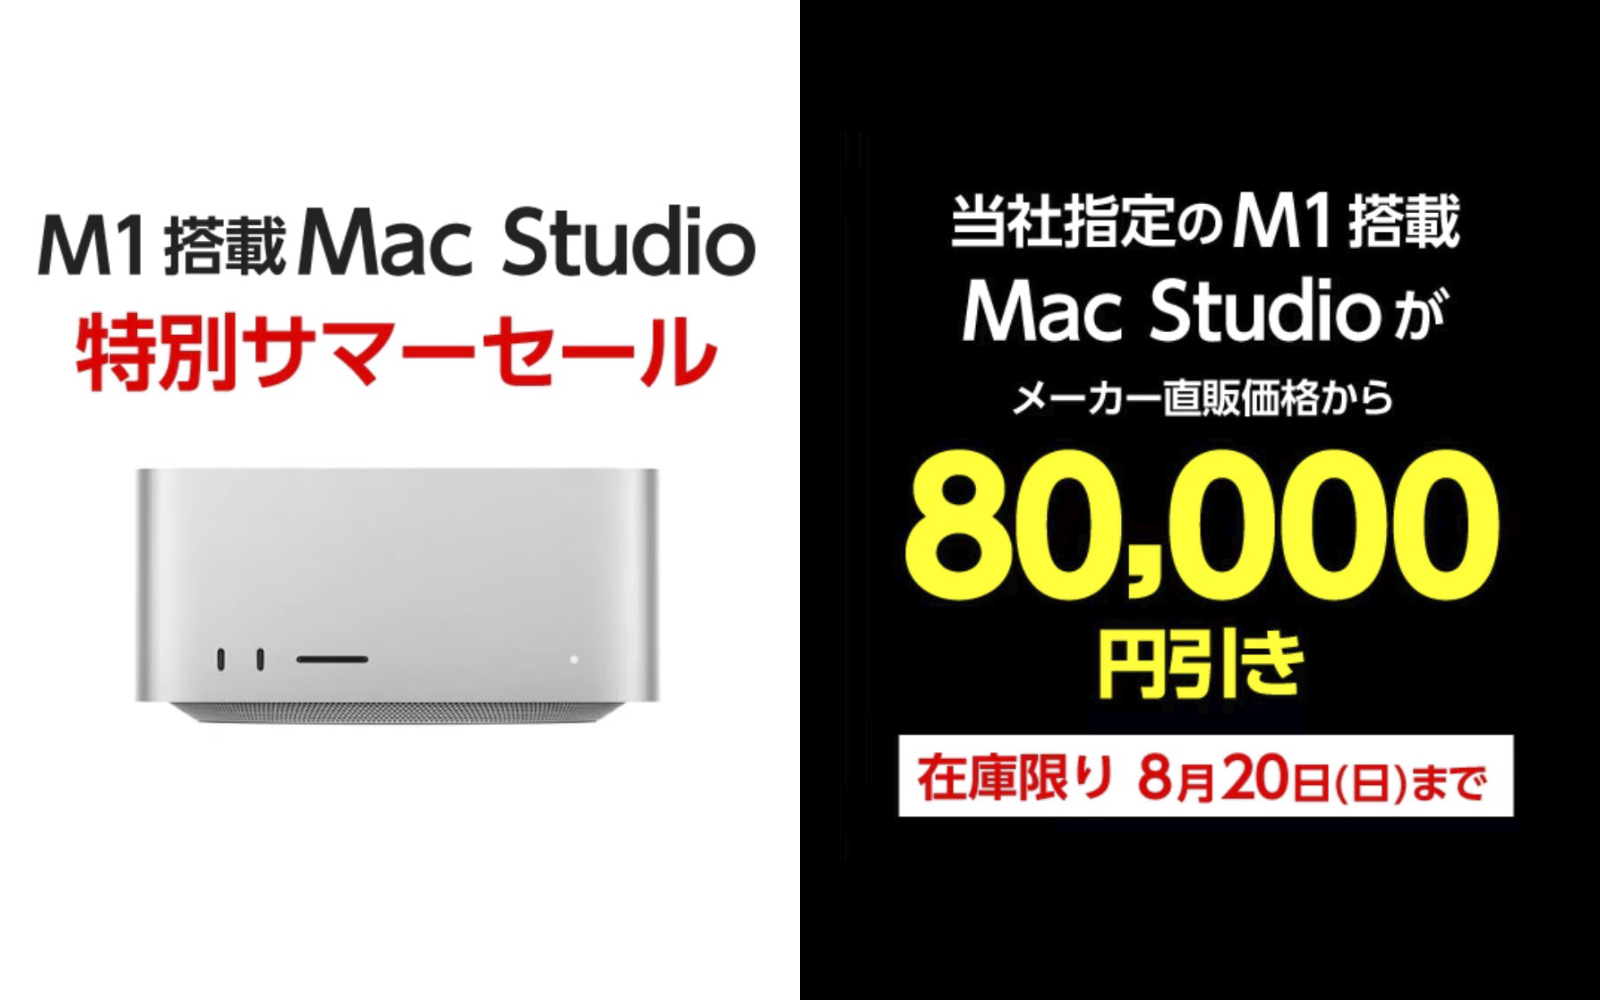 M1 Max Mac Studio on sale